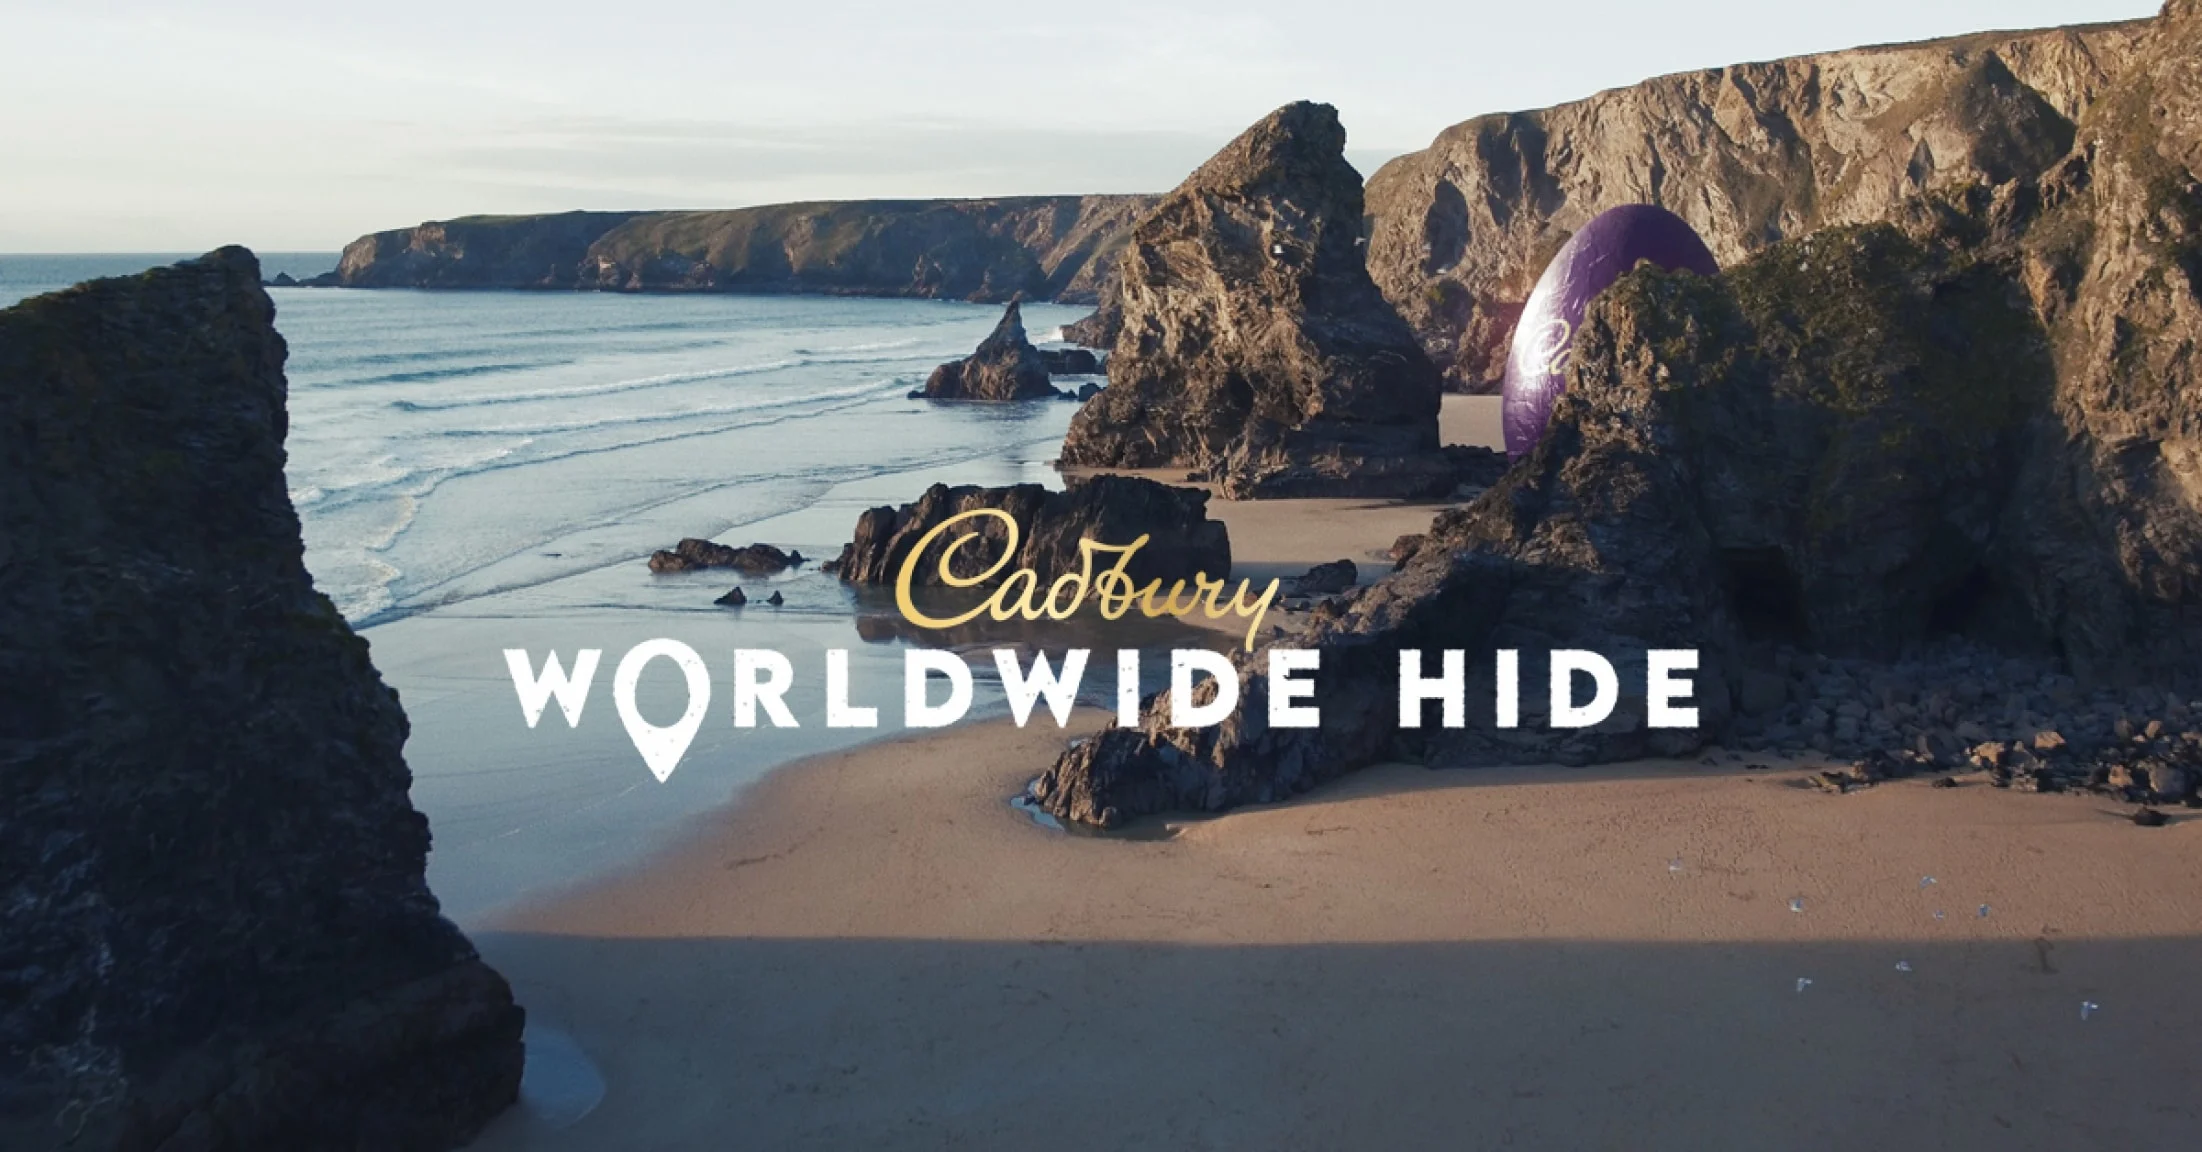 Cadbury Worldwide Hide, with giant easter egg hidden behind cliffs on a beach